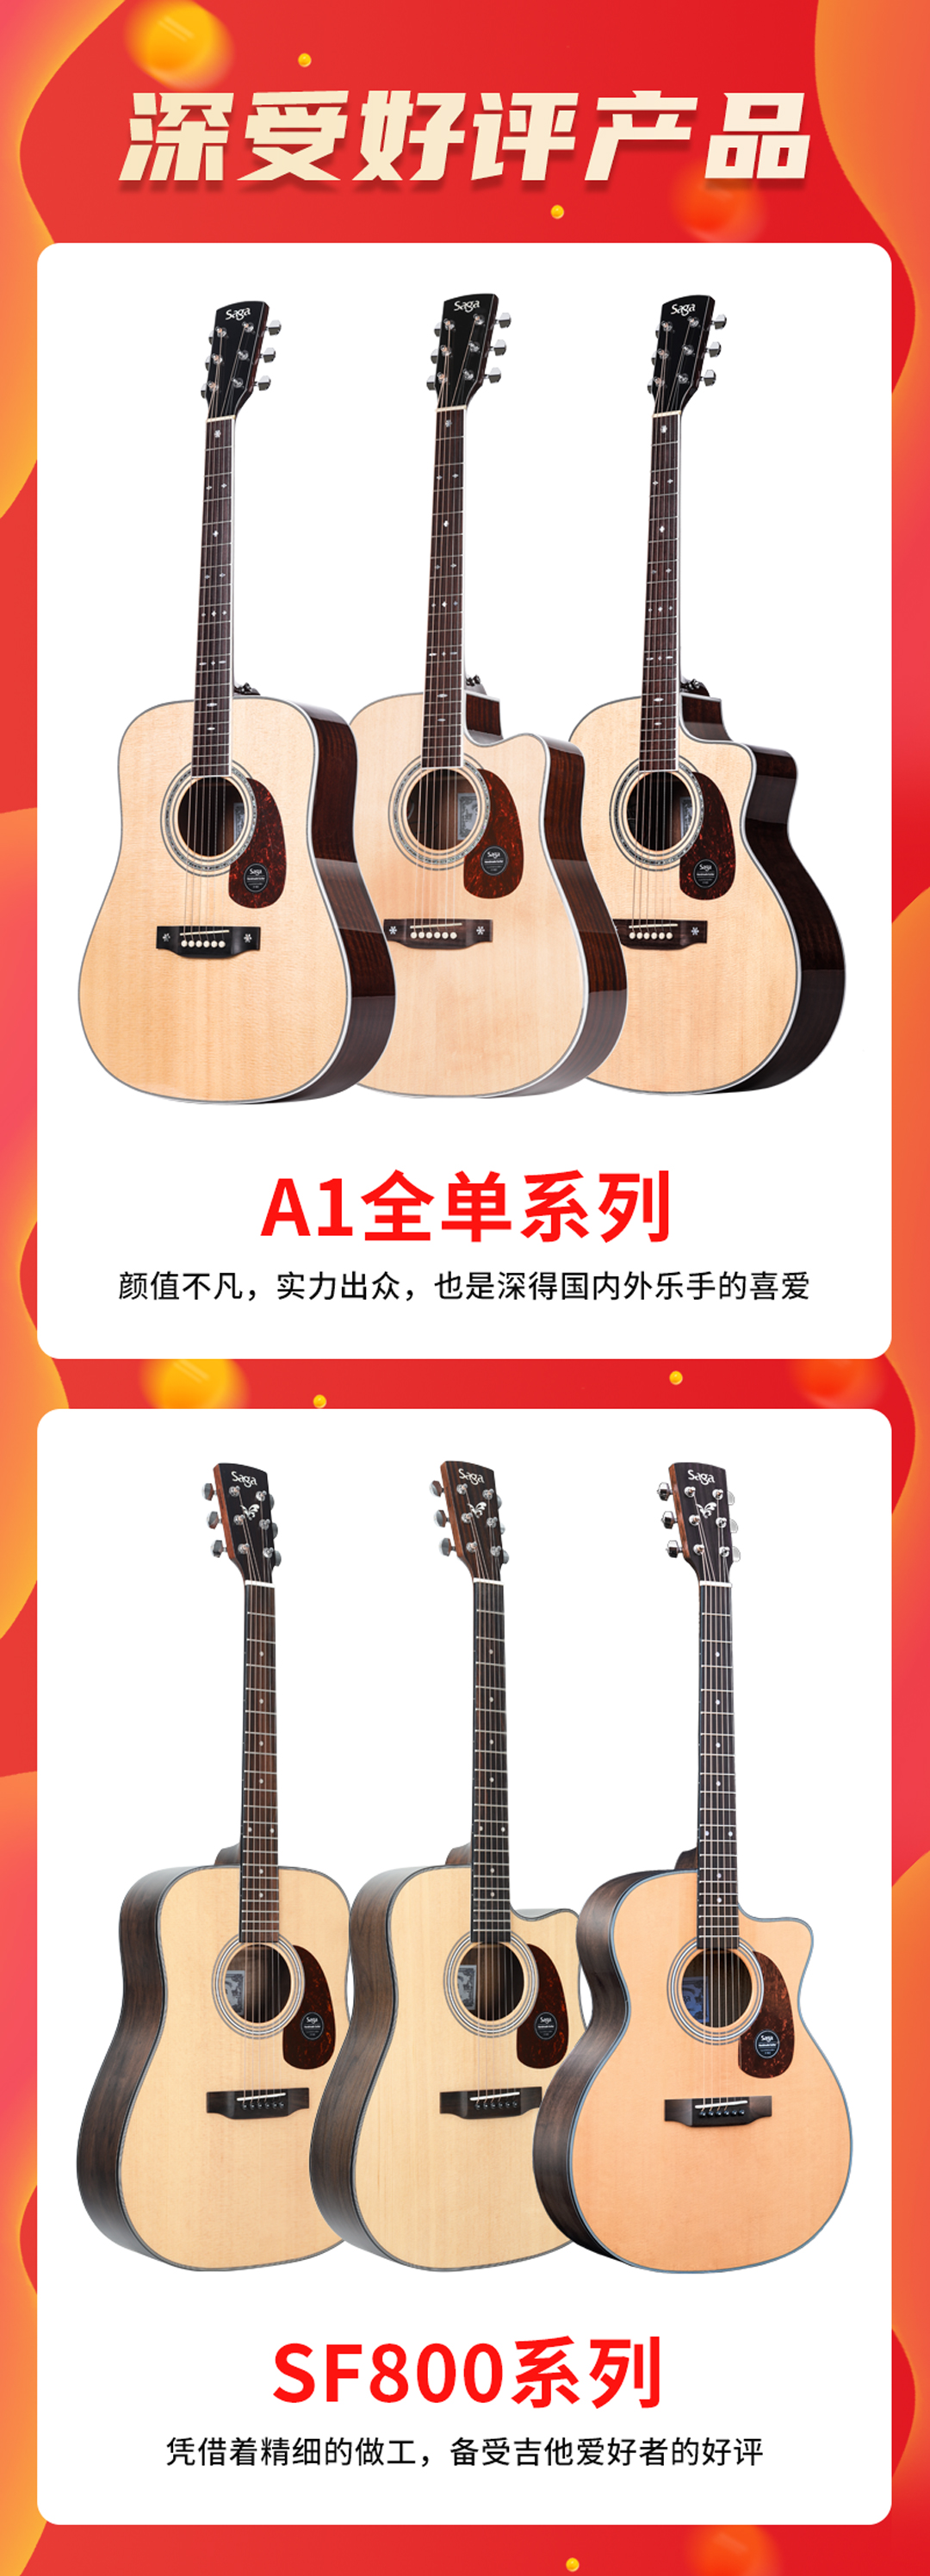 SAGA吉他热销商品榜首_04.jpg